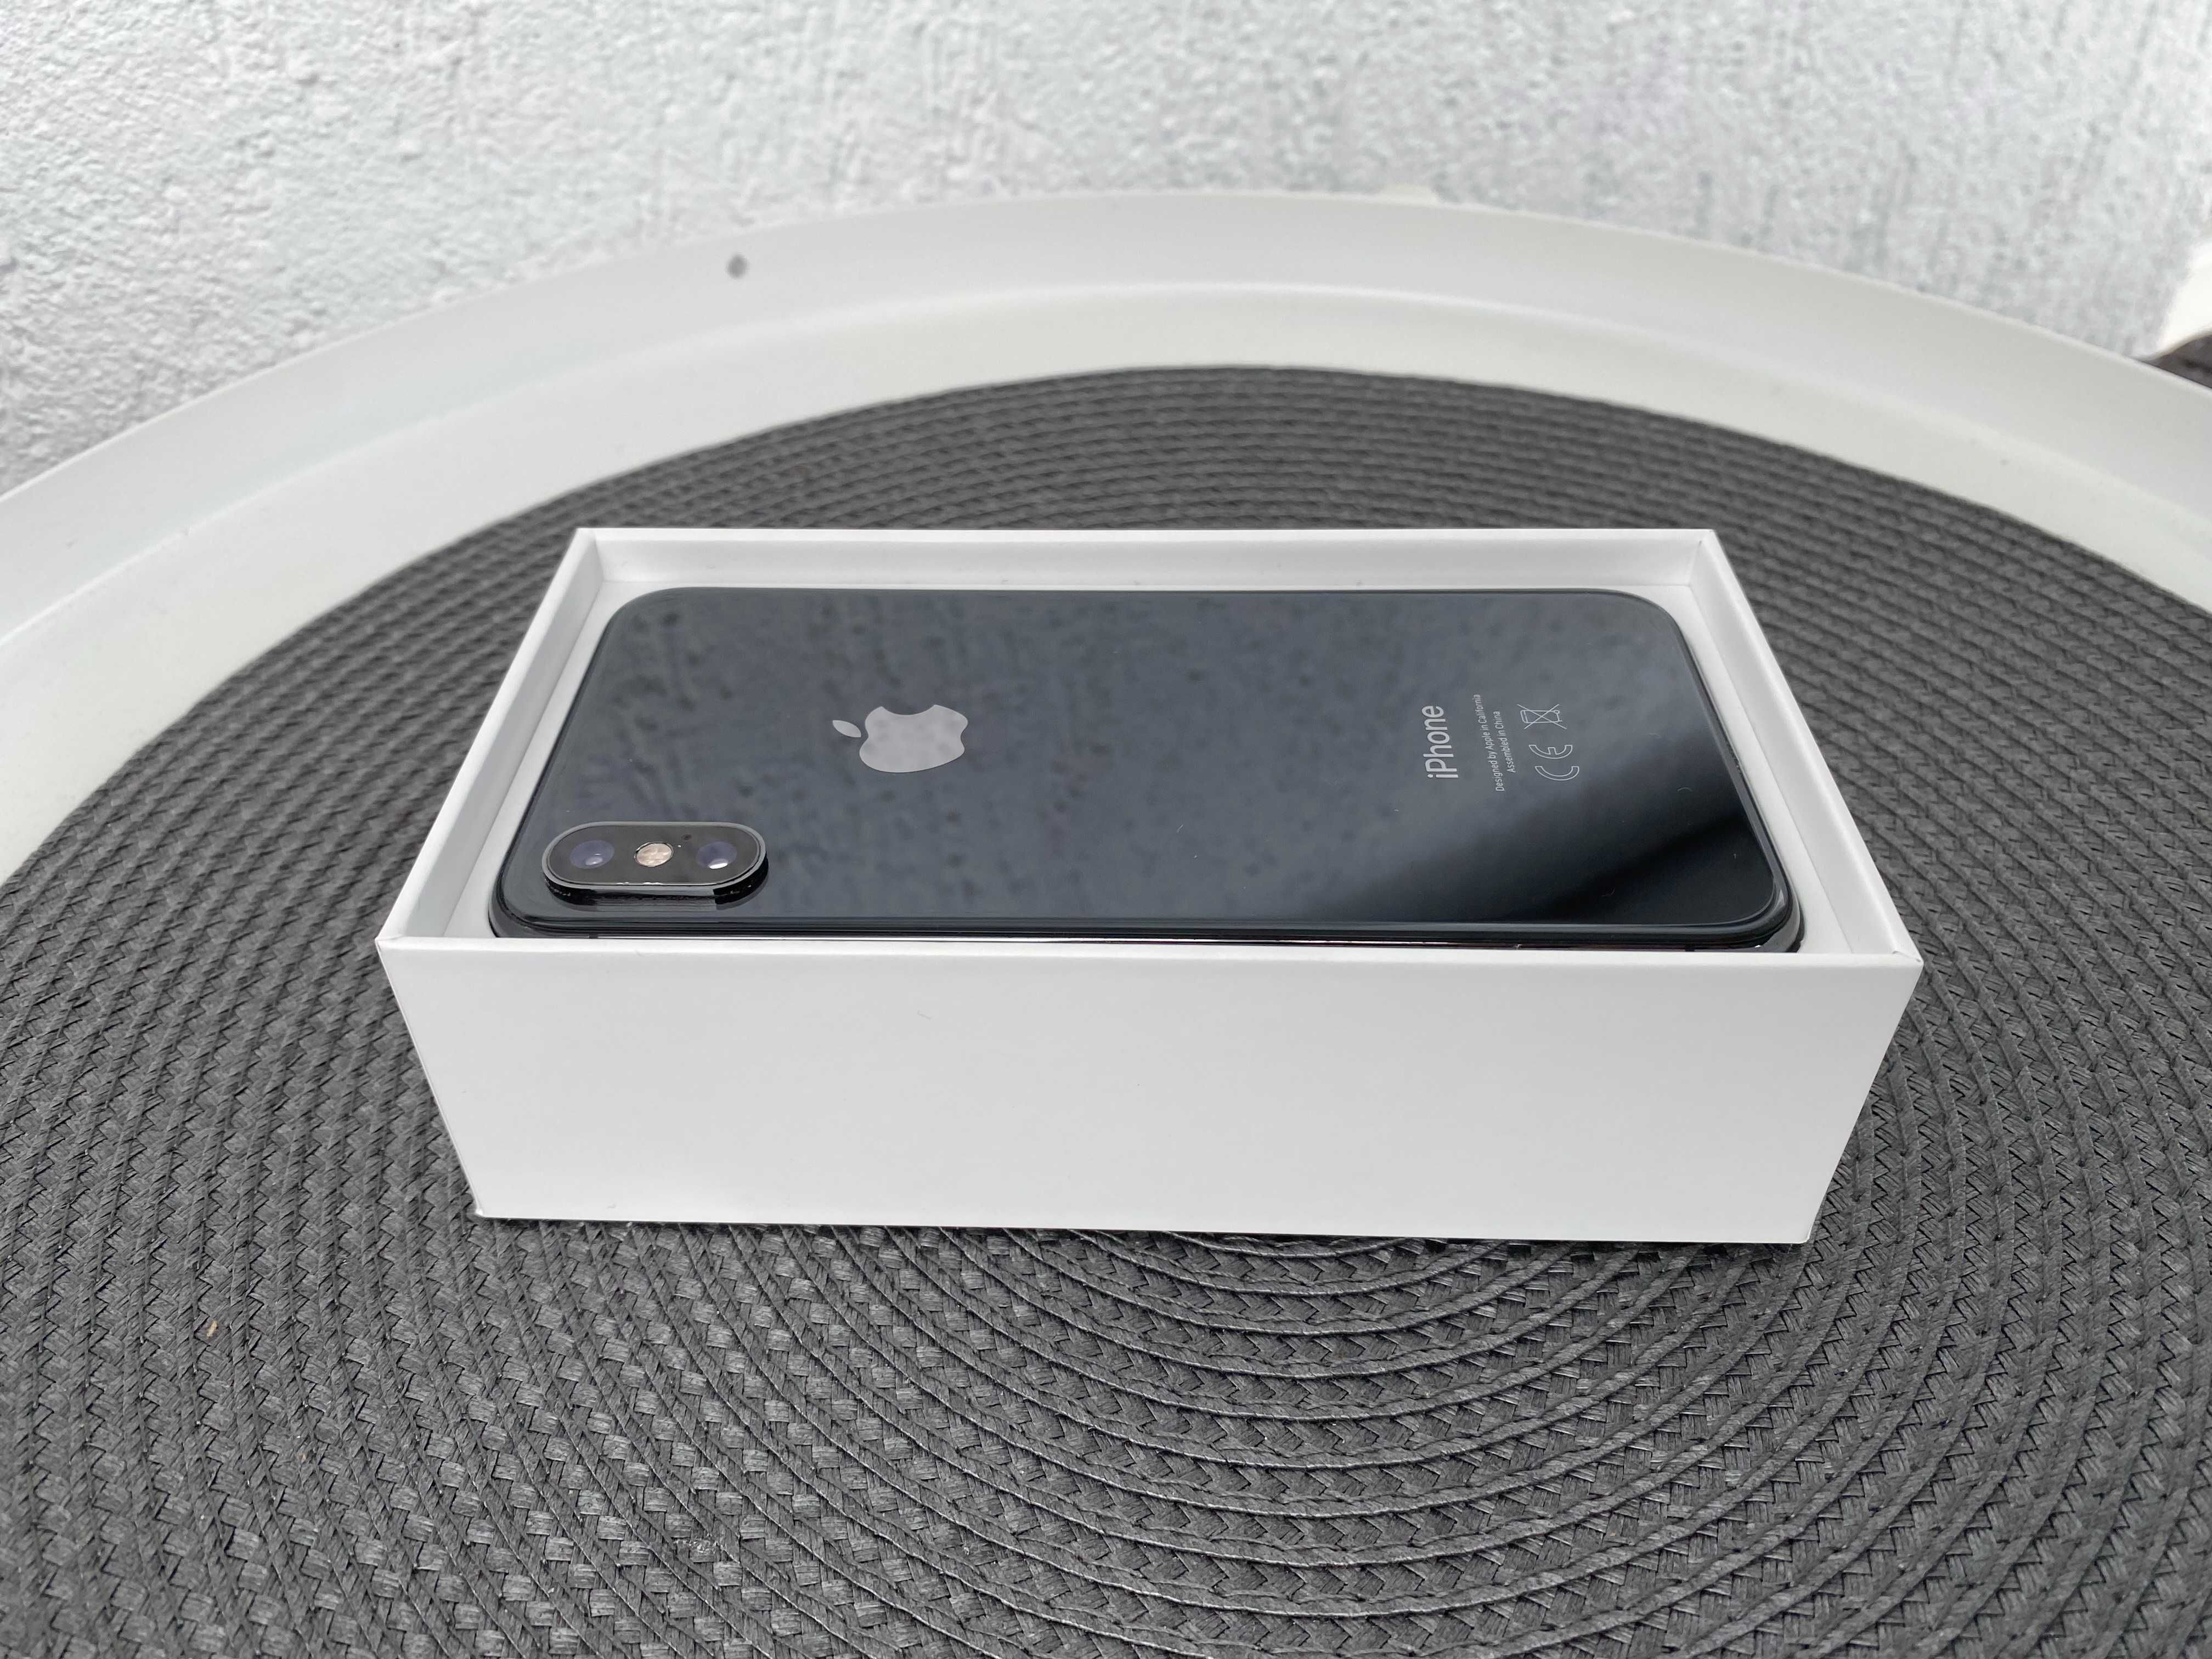 iPhone XS, Space Grey - 64GB